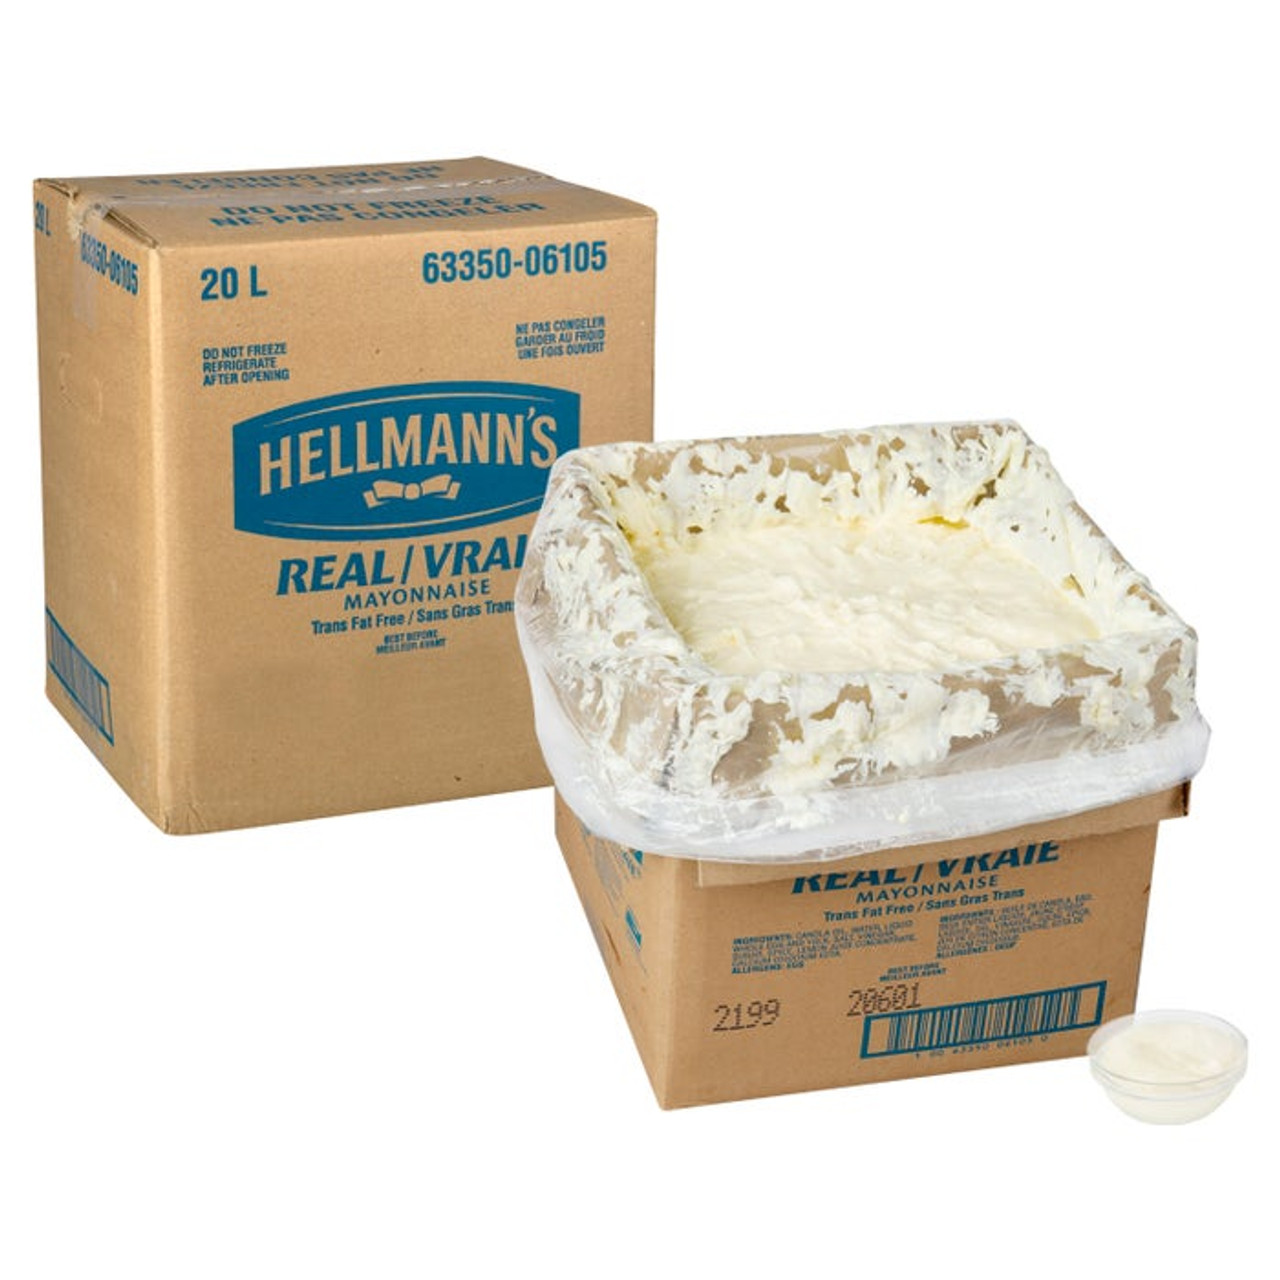 Hellmann's Real Mayonnaise Bag-In-Box (BIB) - 20L / 5.28 Gallon